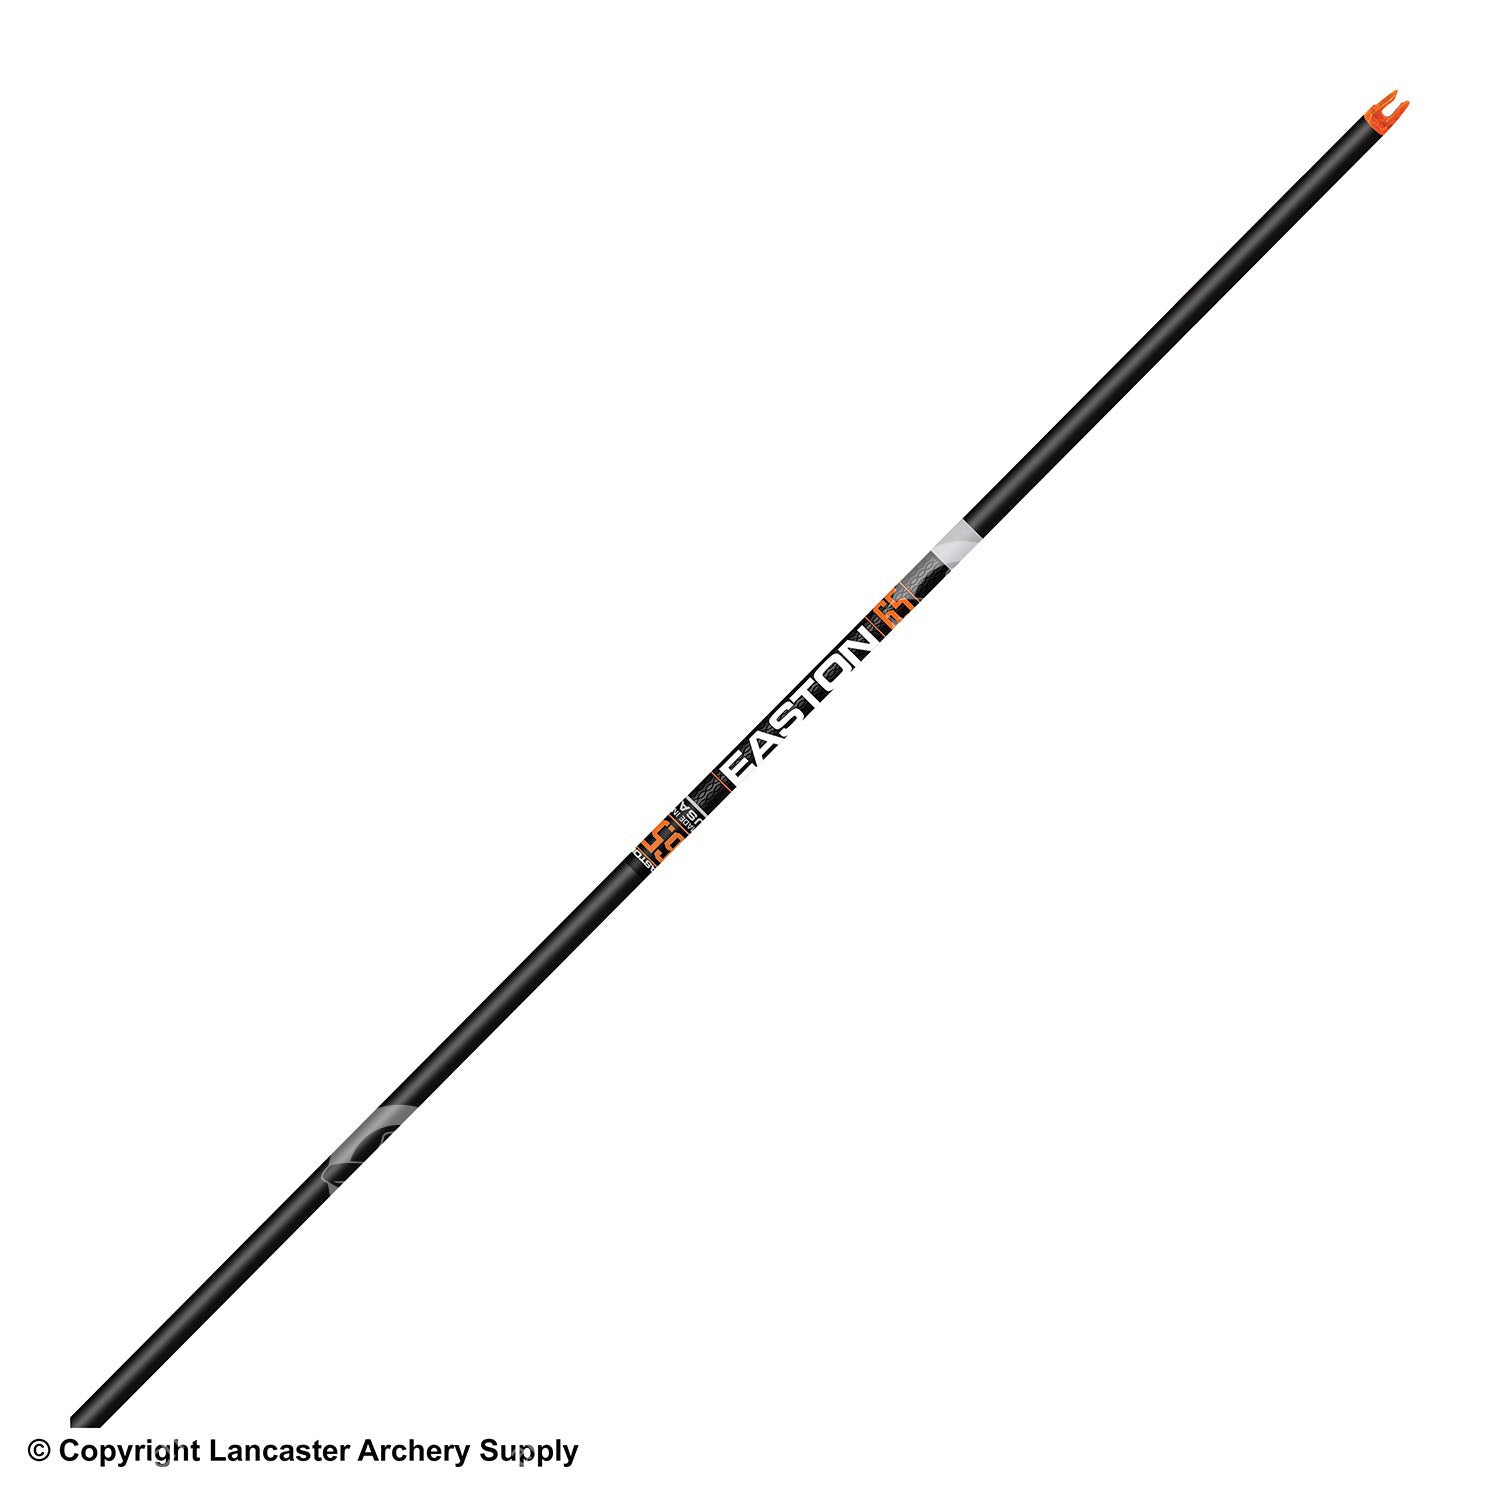 Easton 6.5mm Hunter Classic Arrow Shafts